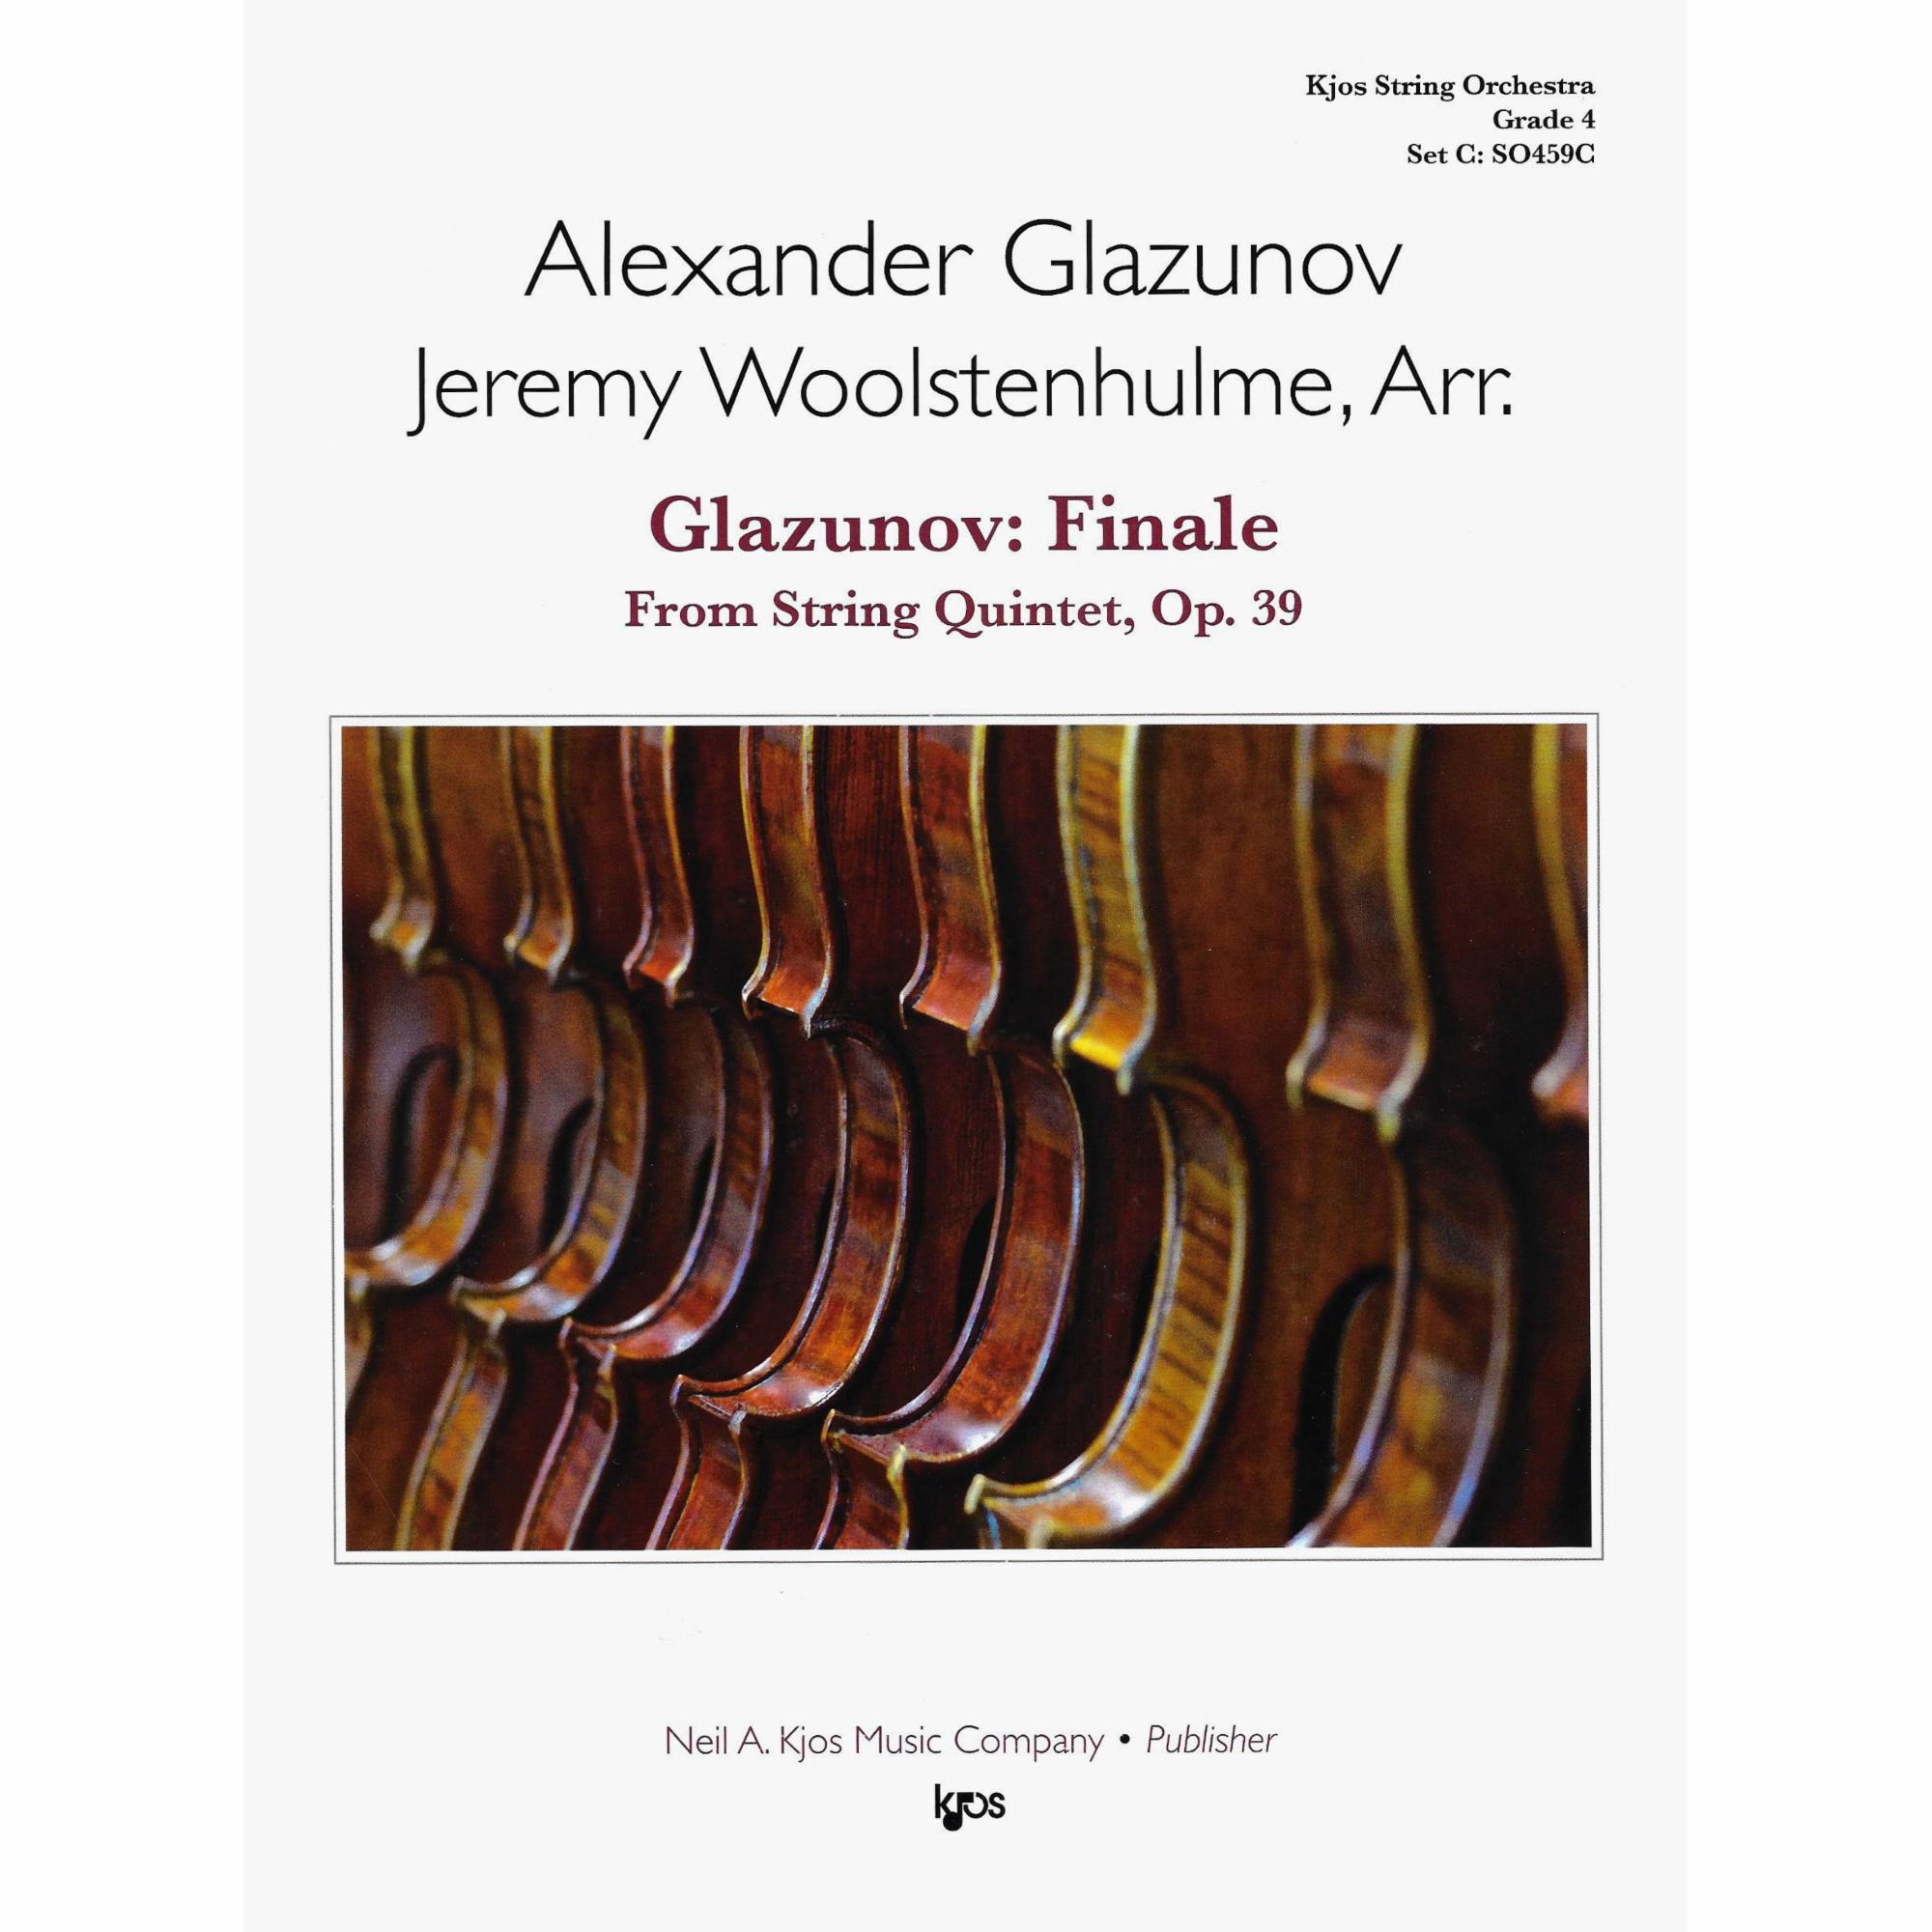 Glazunov -- Finale, from String Quintet, Op. 39 for String Orchestra